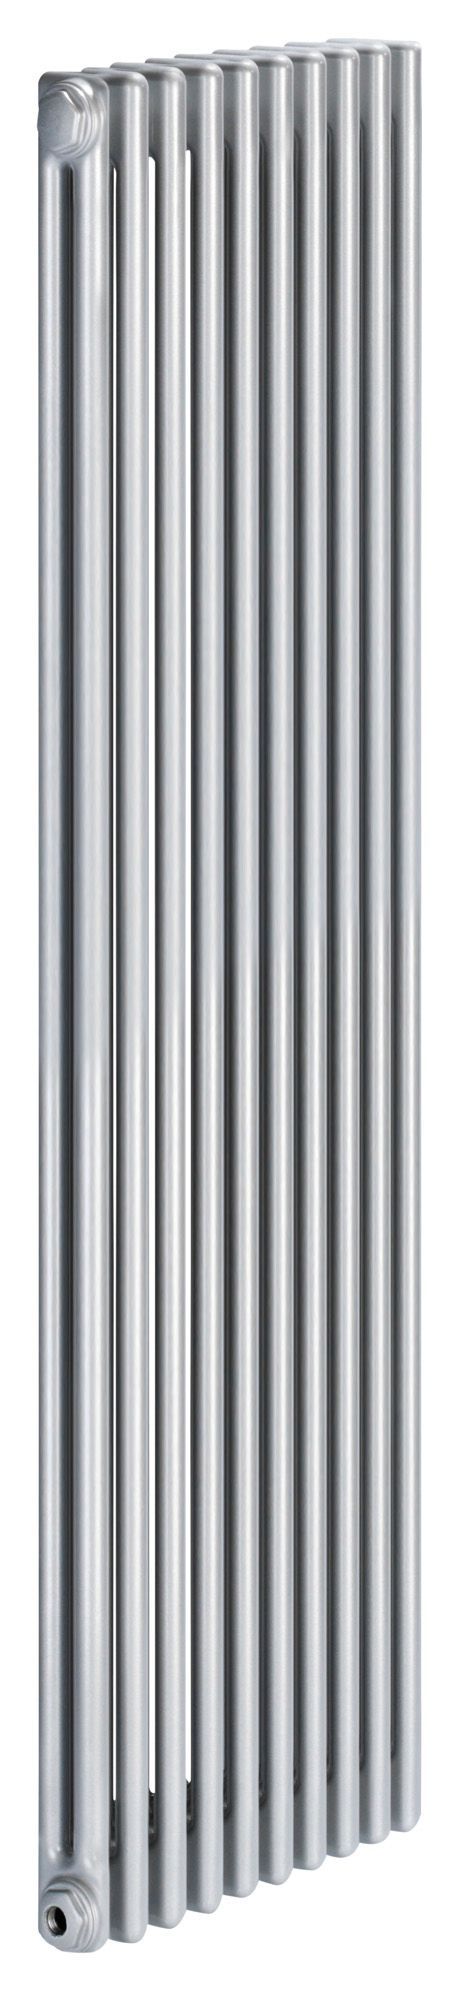 Acova Silver 2 Column Radiator, (W)490mm x (H)2000mm